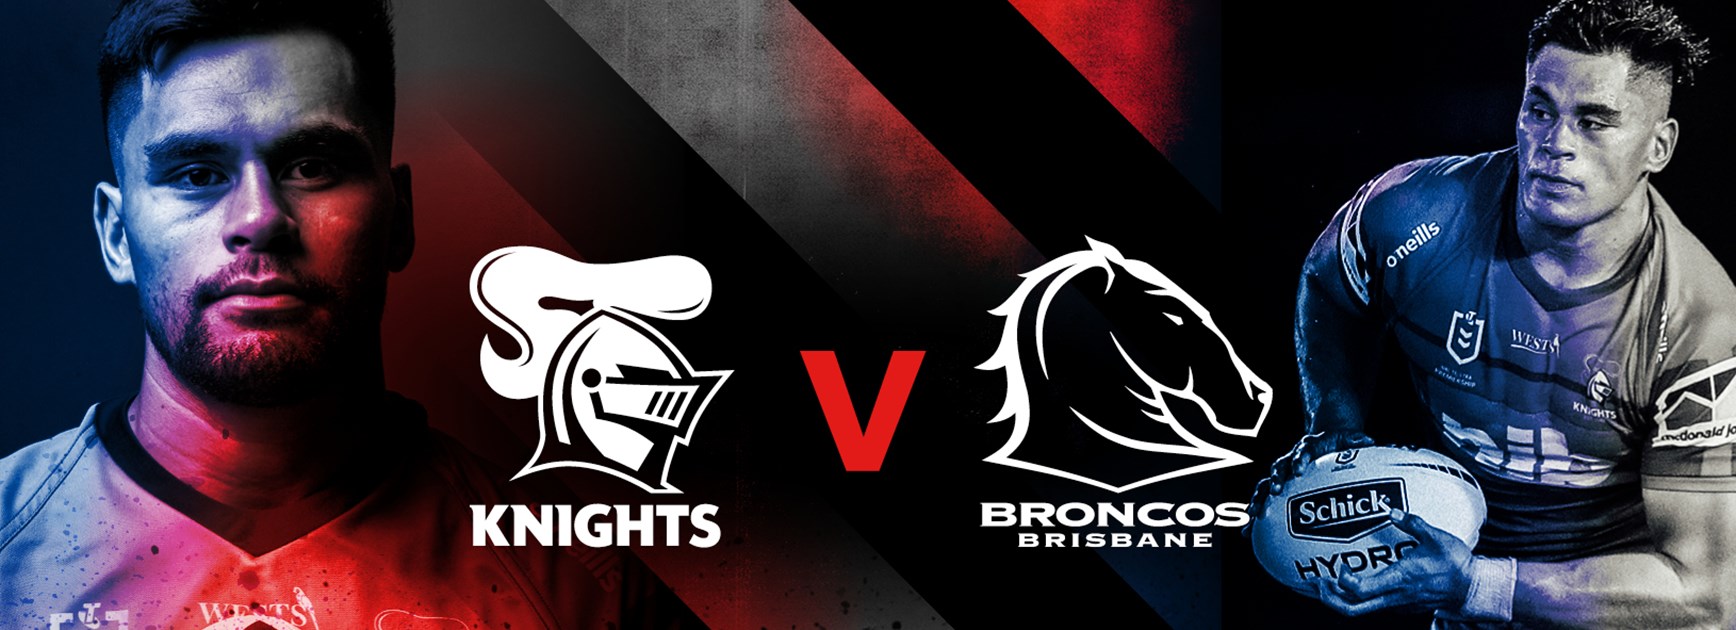 Knights v Broncos Round 6 NRL team list